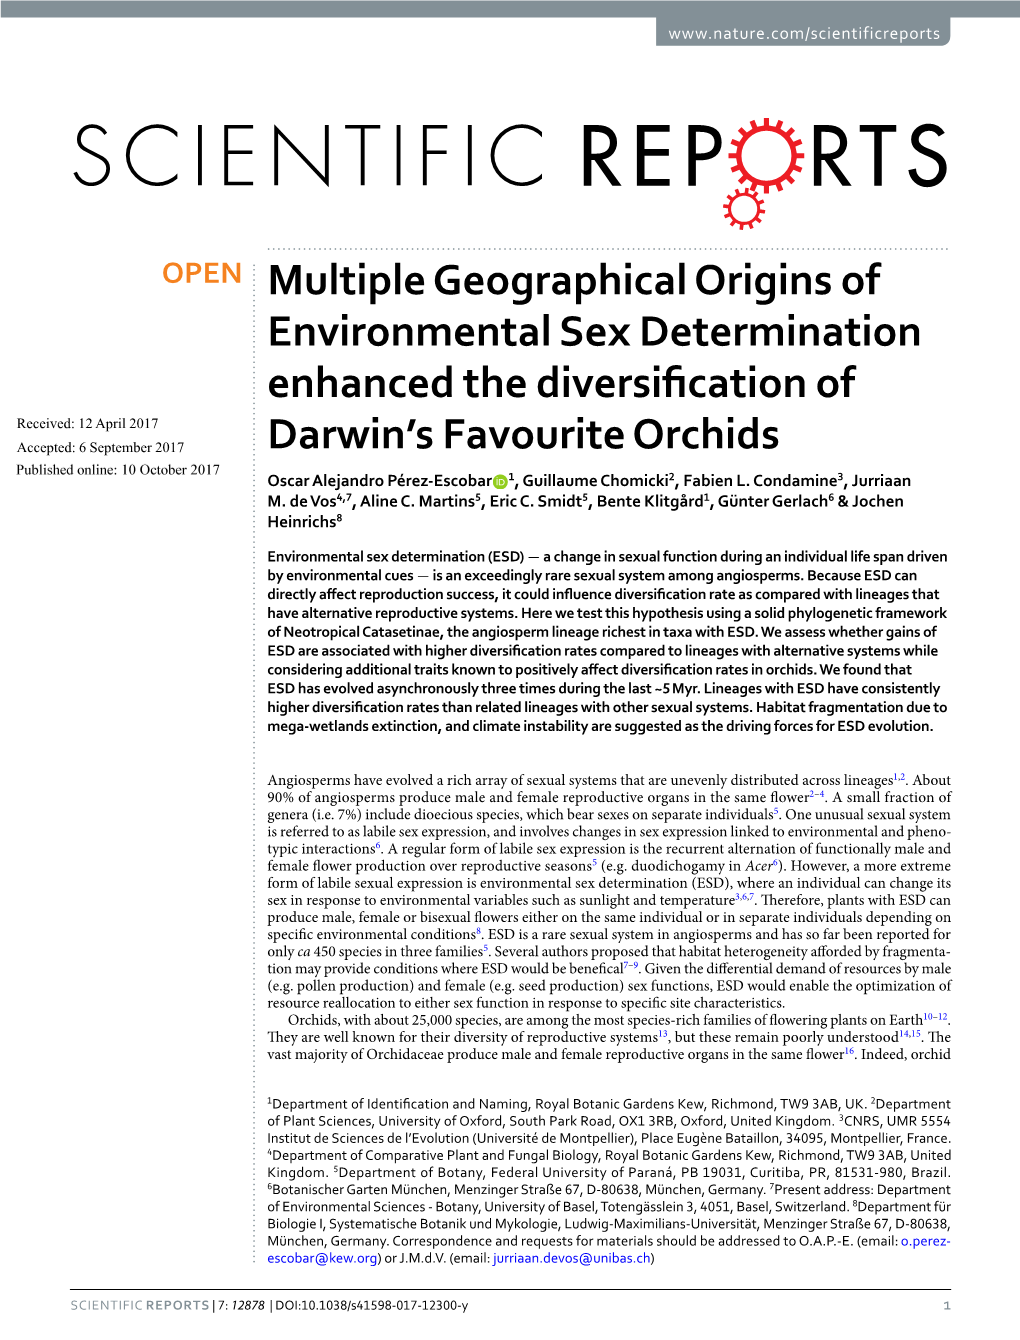 Multiple Geographical Origins of Environmental Sex Determination